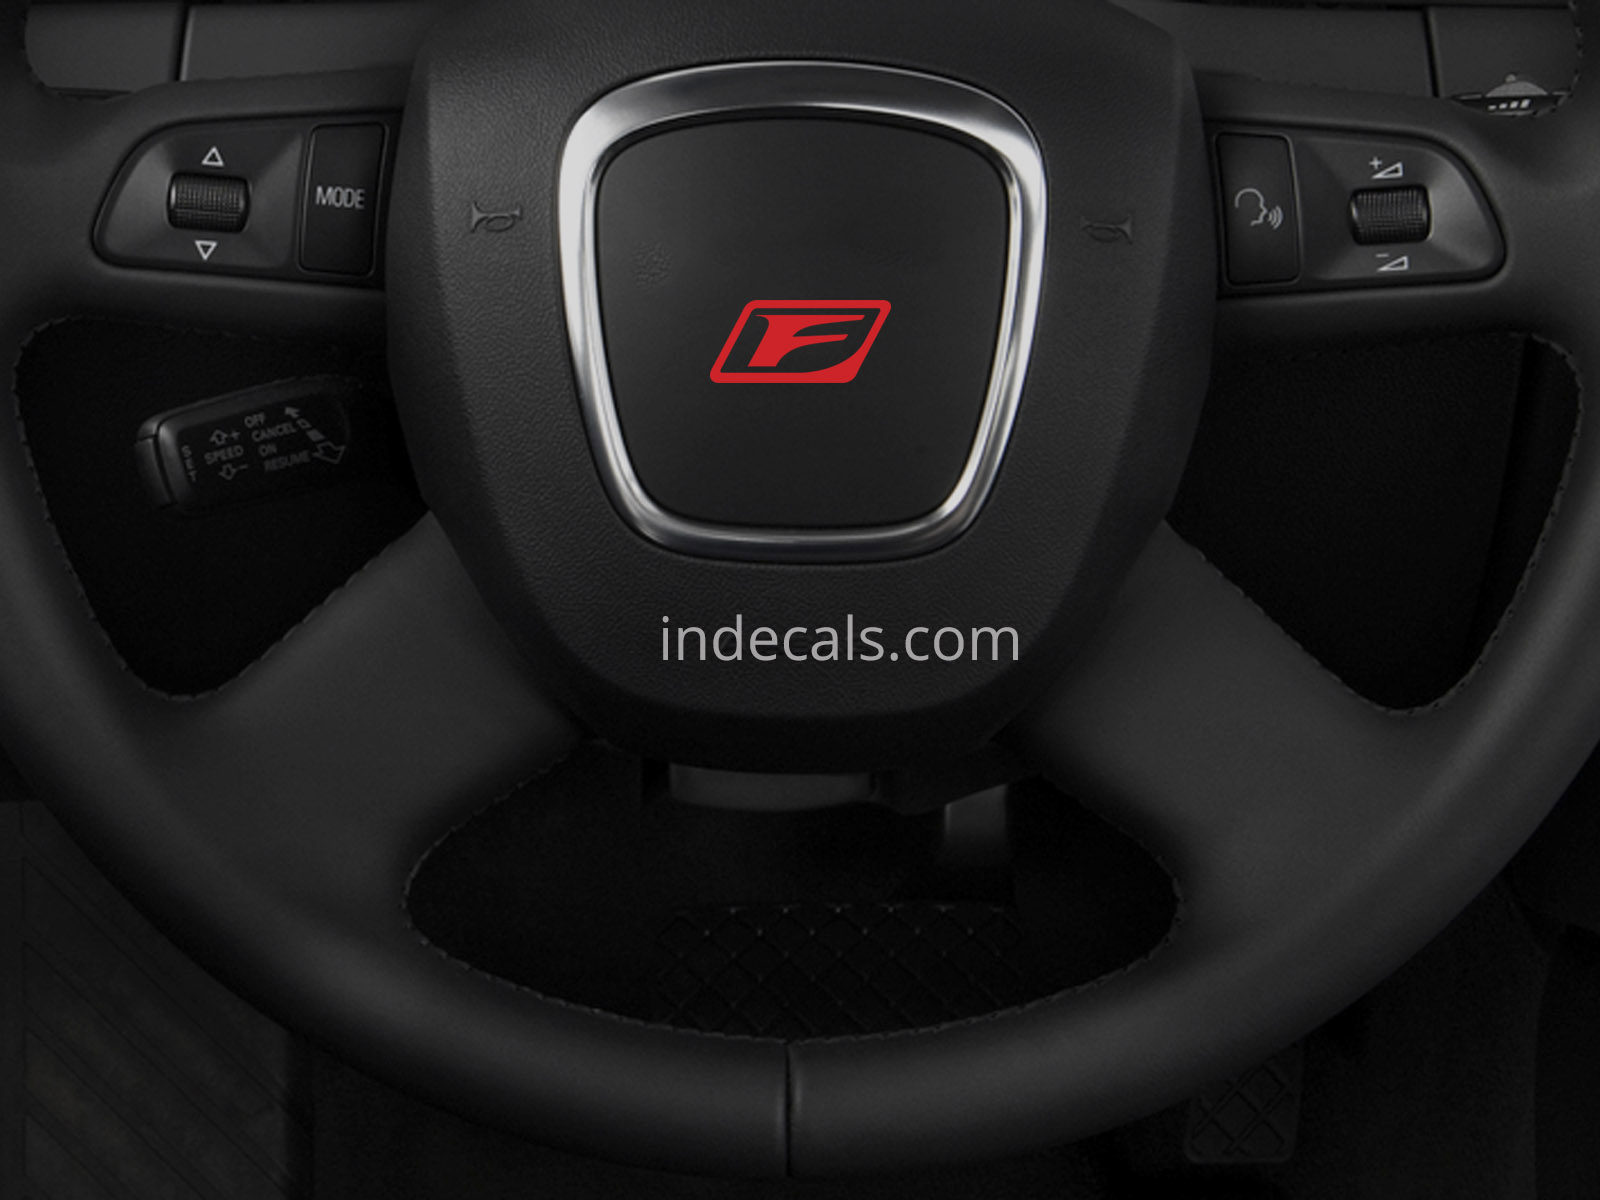 3 x Lexus F-sport Stickers for Steering Wheel - Red